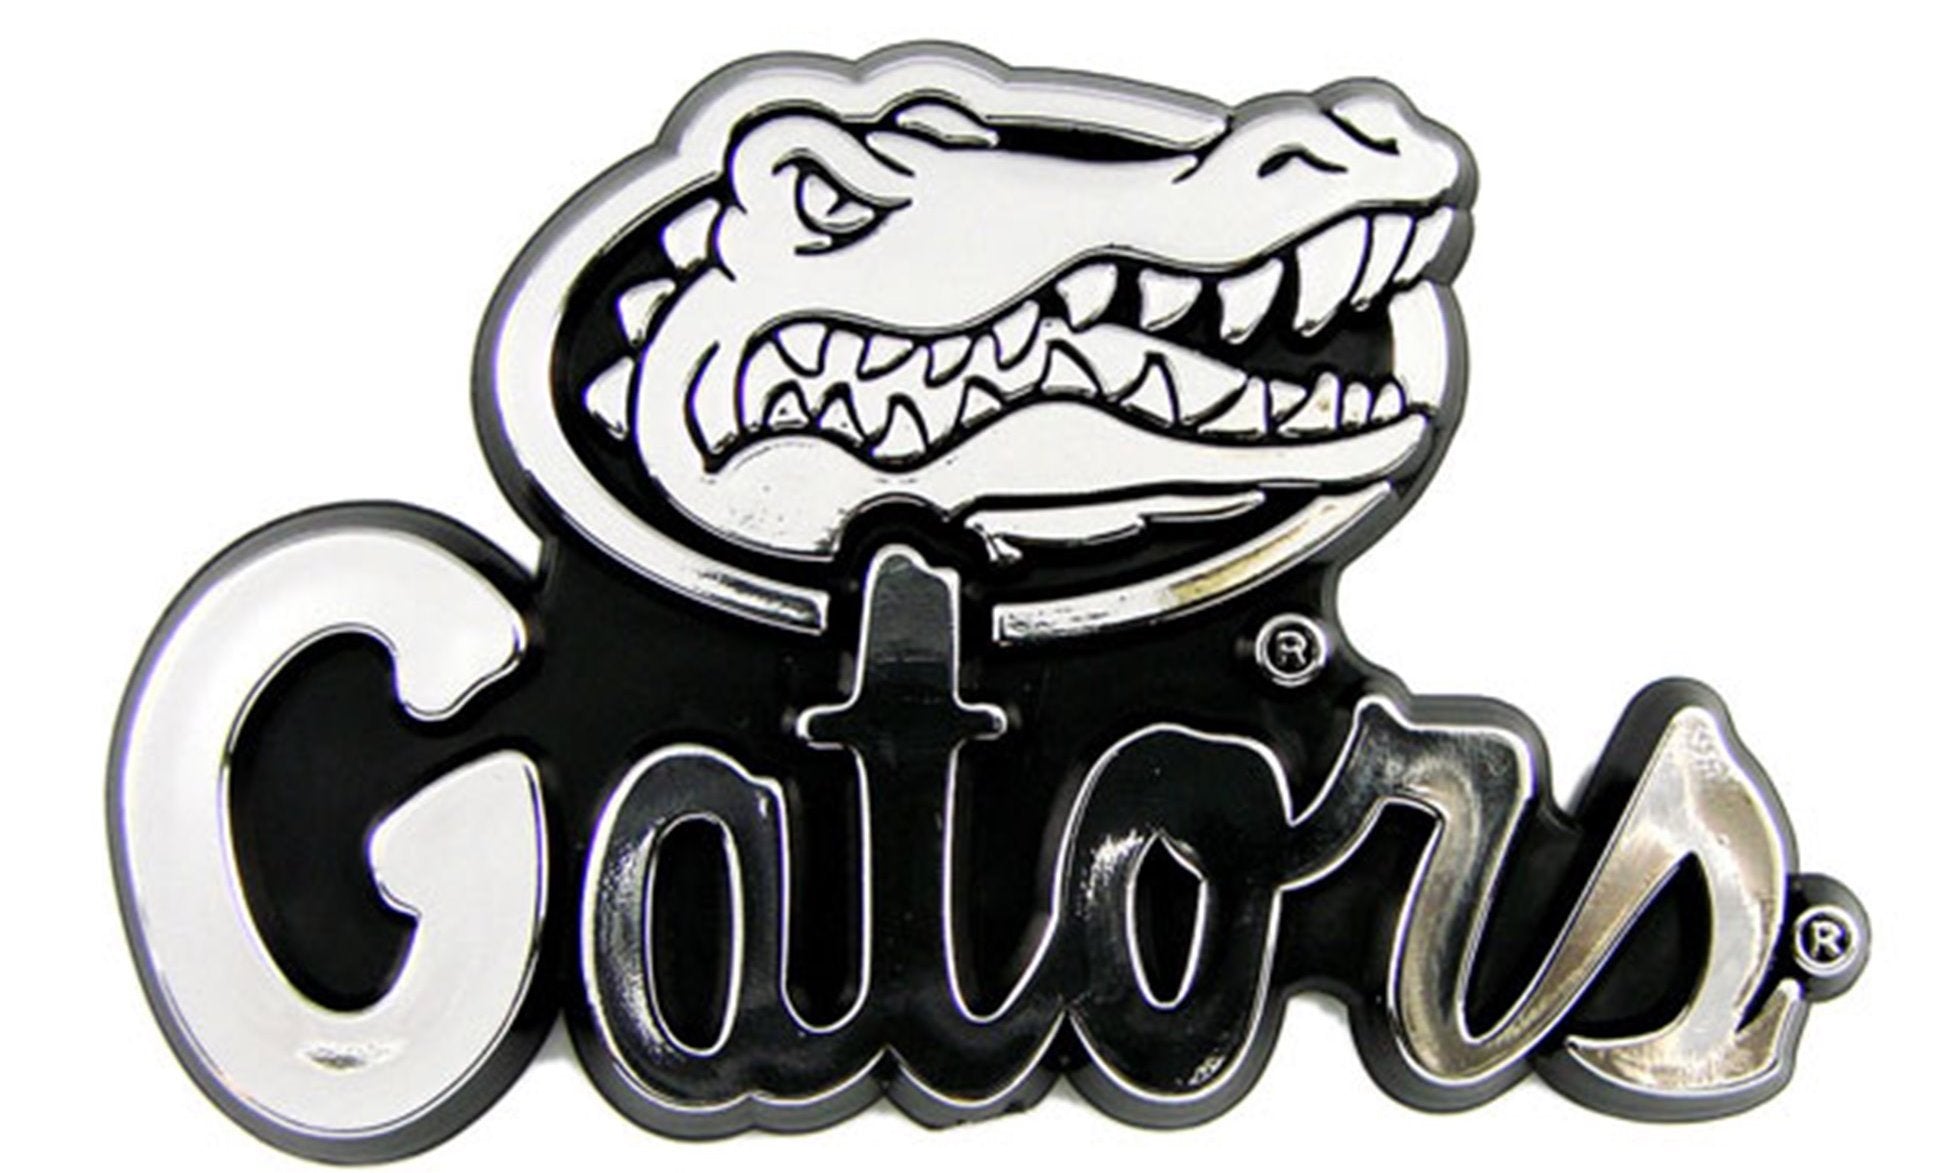 University of Florida Gators Auto Emblem, Plastic Molded, Silver Chrome Color, Raised 3D Effect, Adhesive Backing